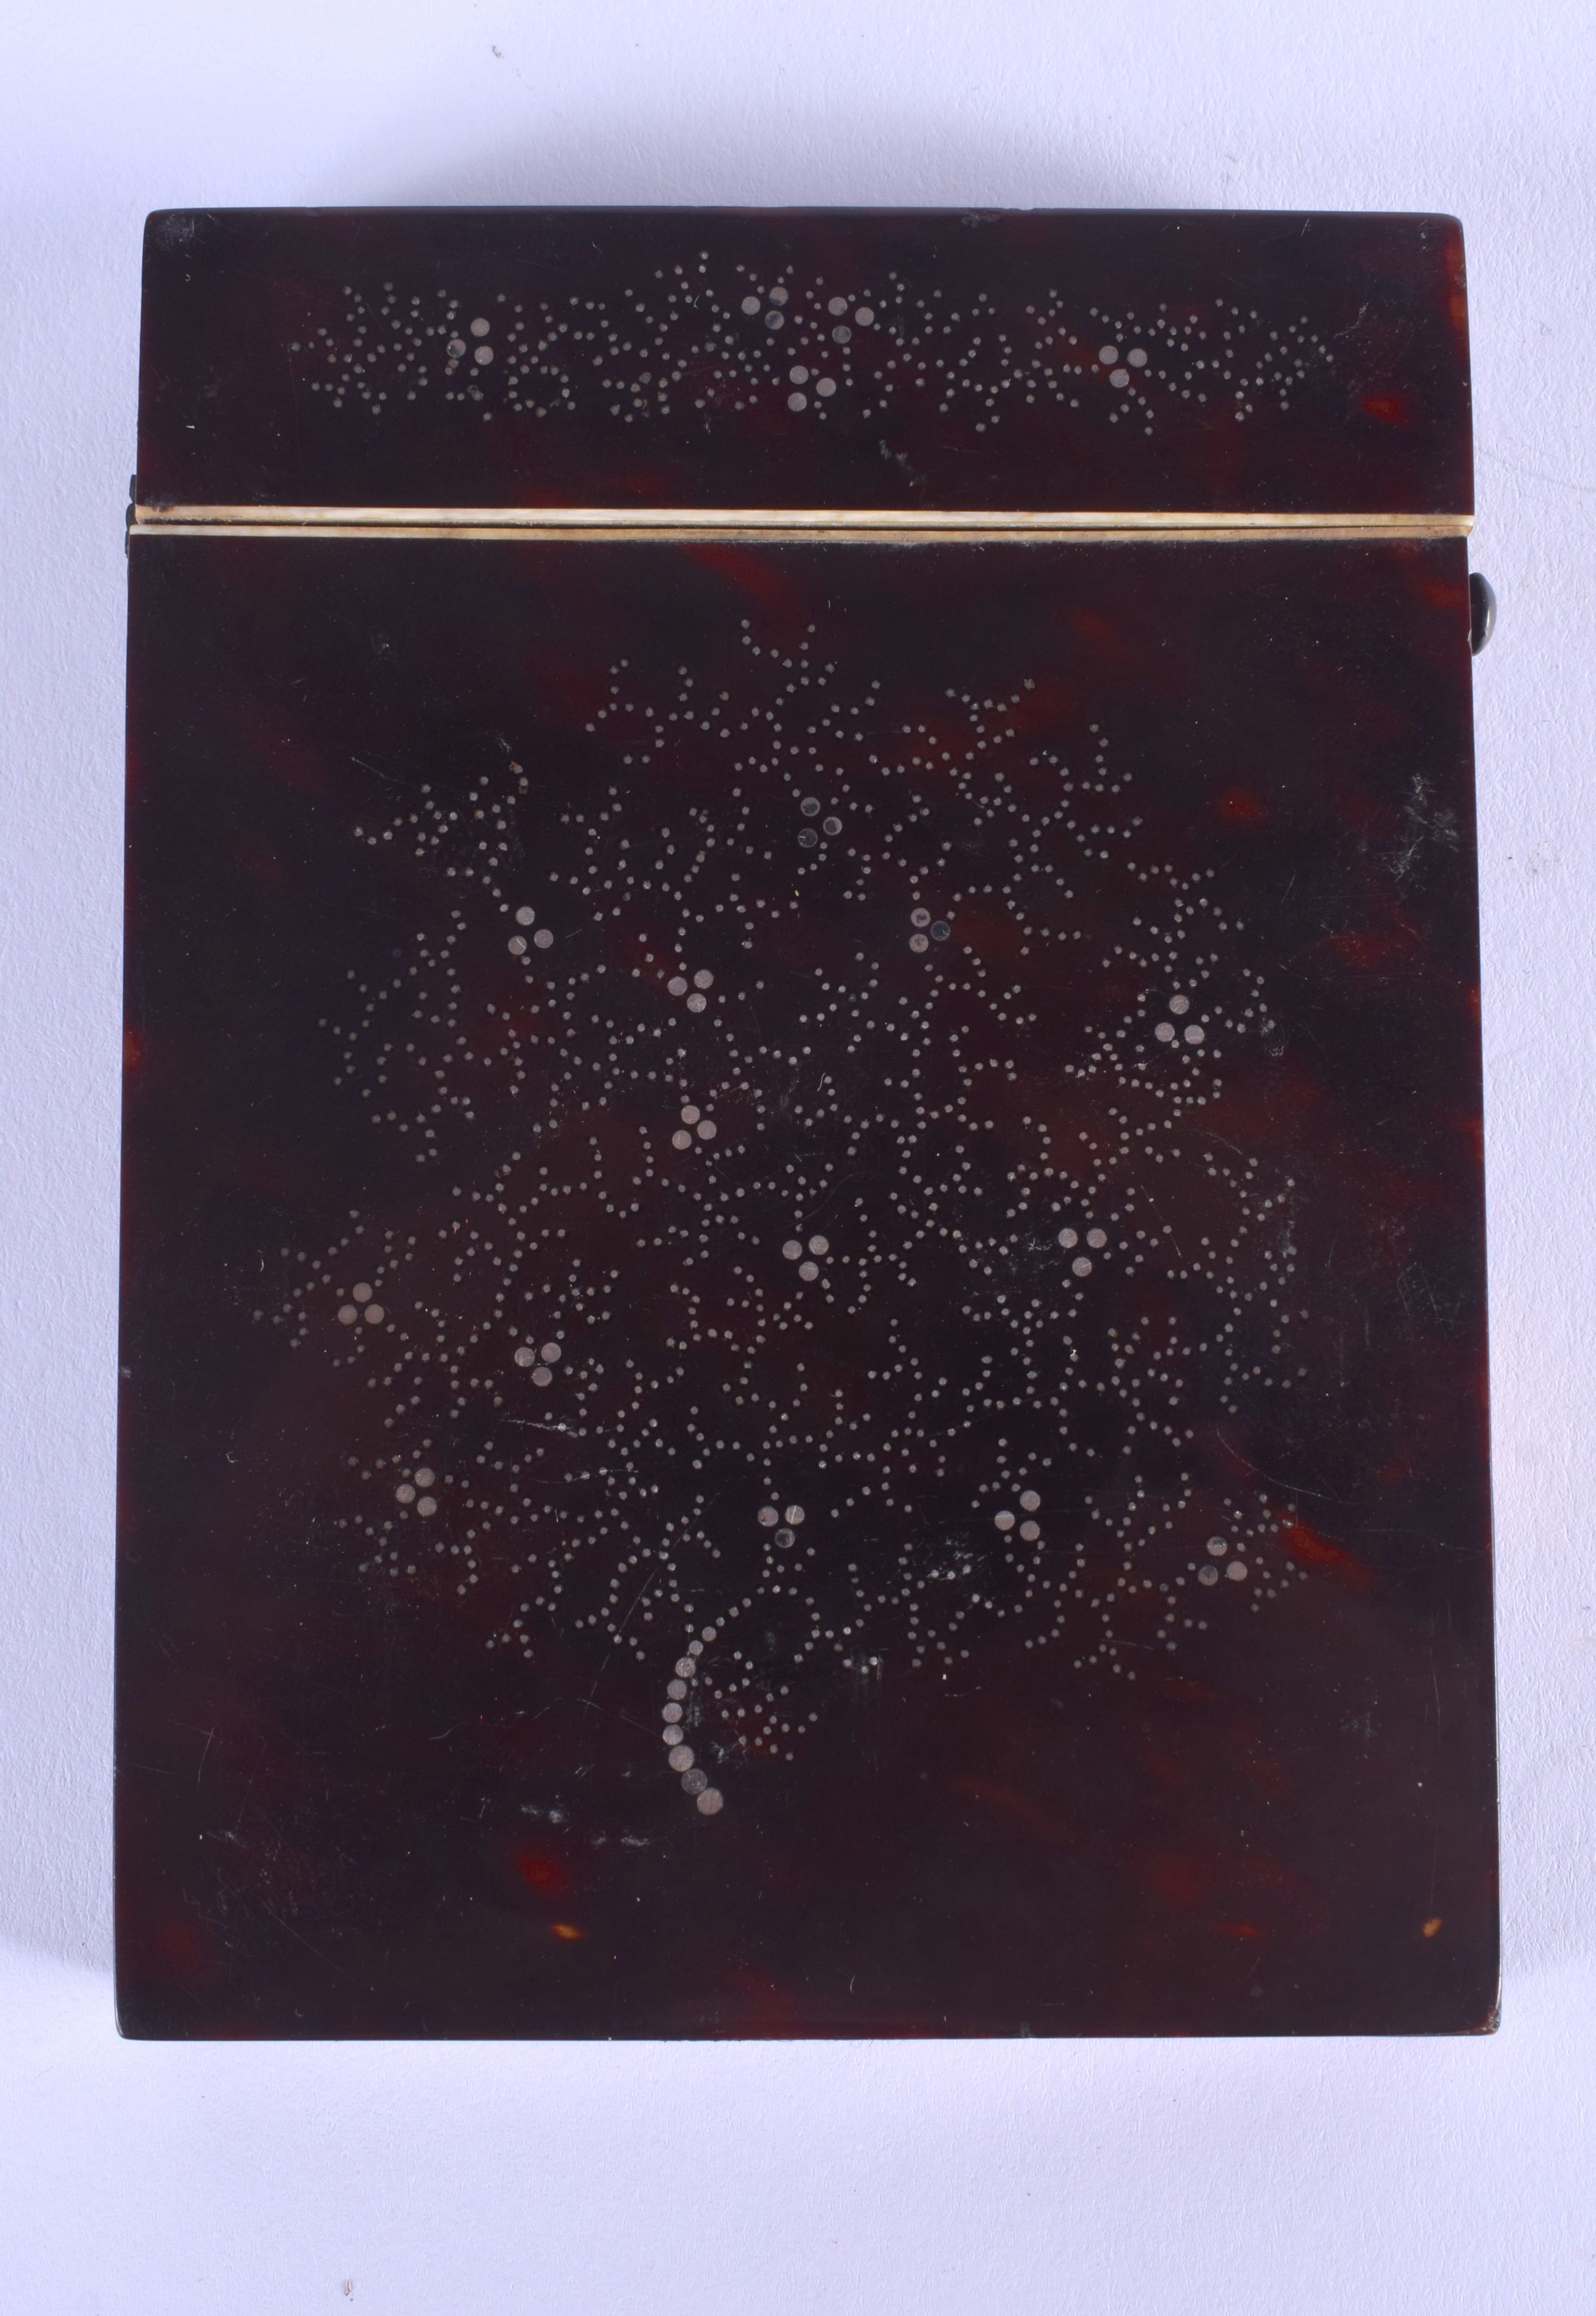 A REGENCY SILVER INLAID PIQUE WORK TORTOISESHELL CARD CASE. 7.5 cm x 9.5 cm.